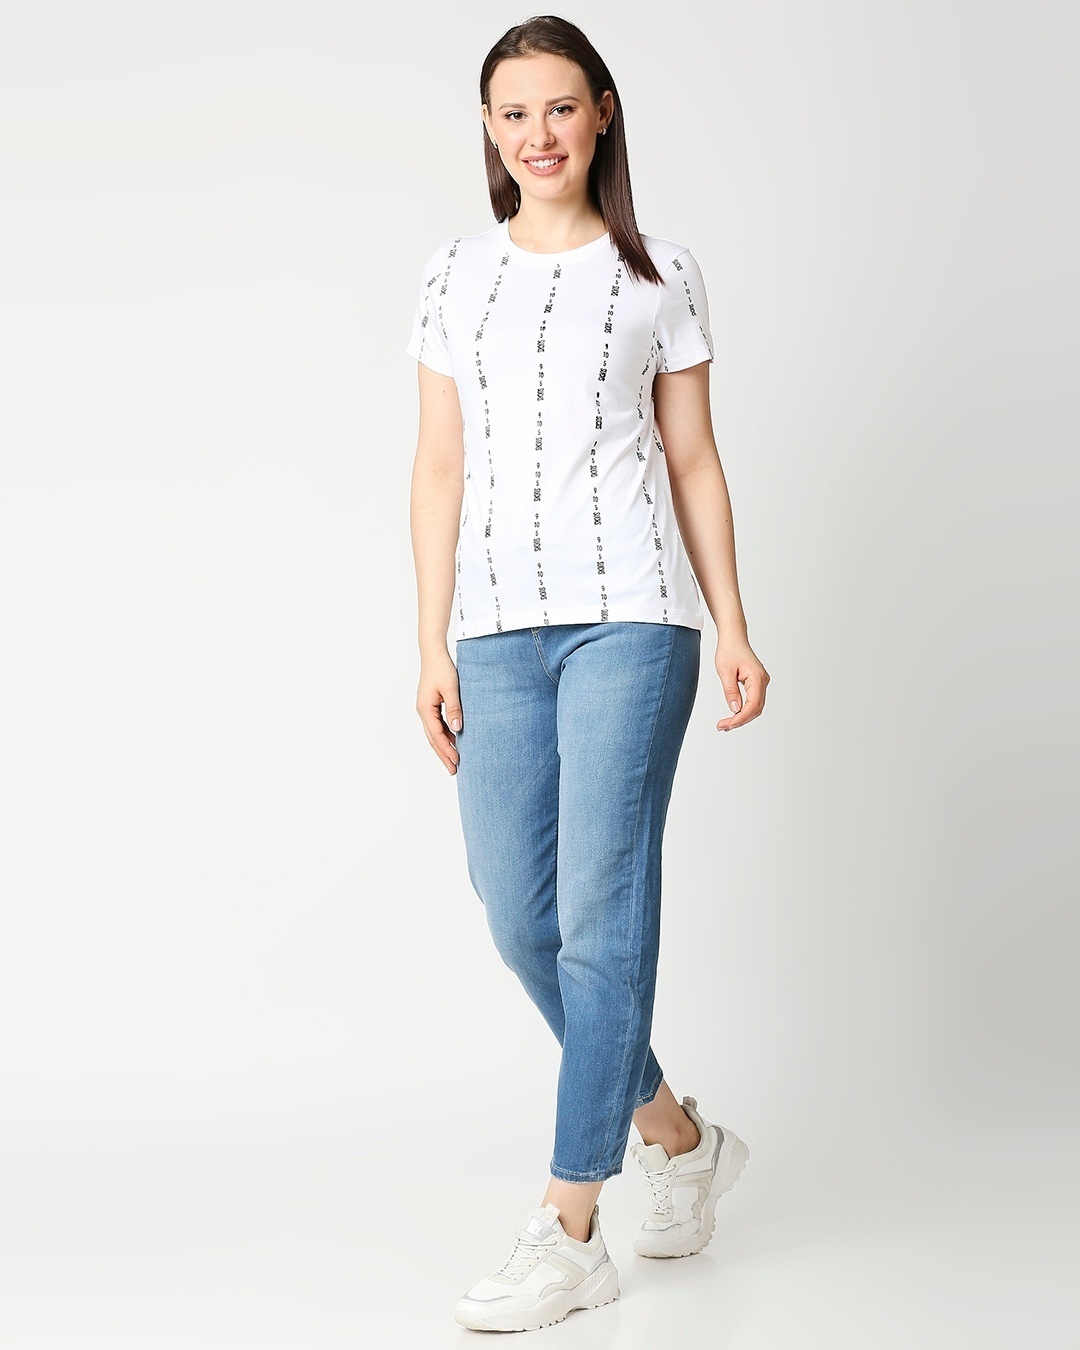 Shop Job Insanity All Over Printed Women Half Sleeve White T-Shirt